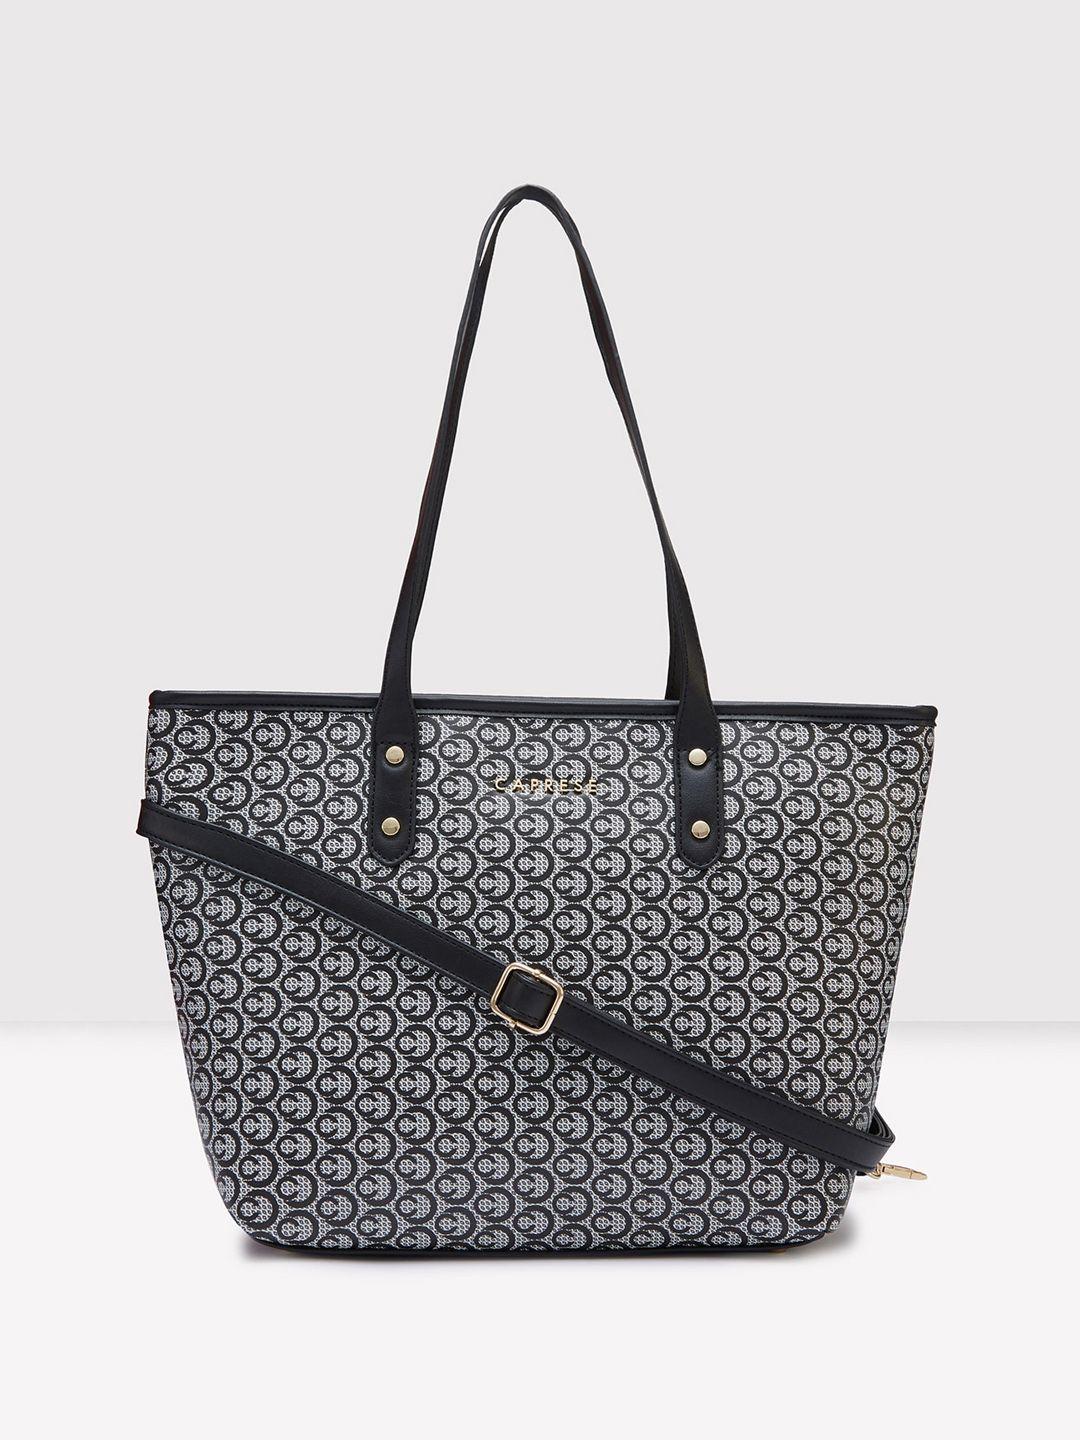 caprese geometric printed structured leather handheld bag